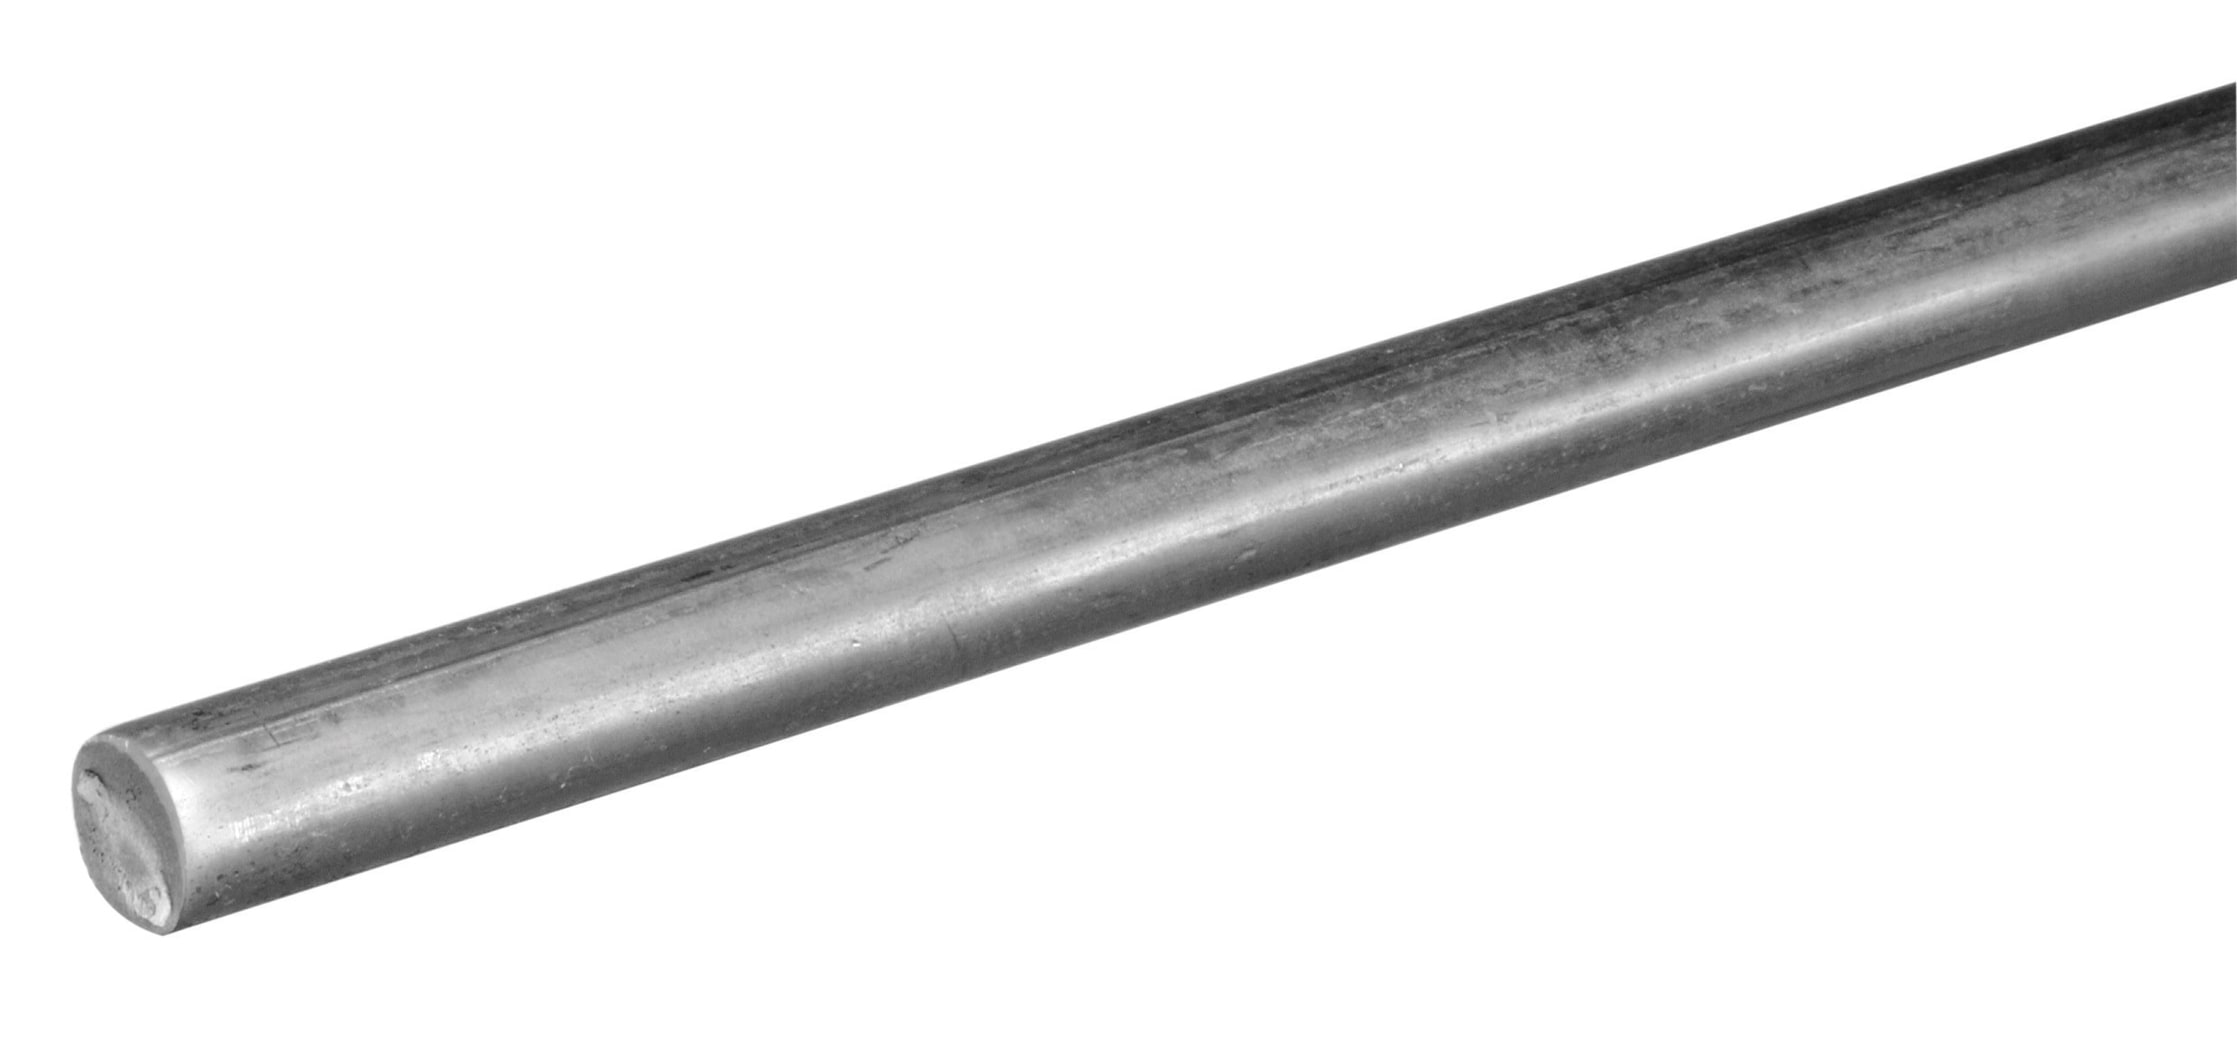 Horizontal Round Bar - Long - 8' length